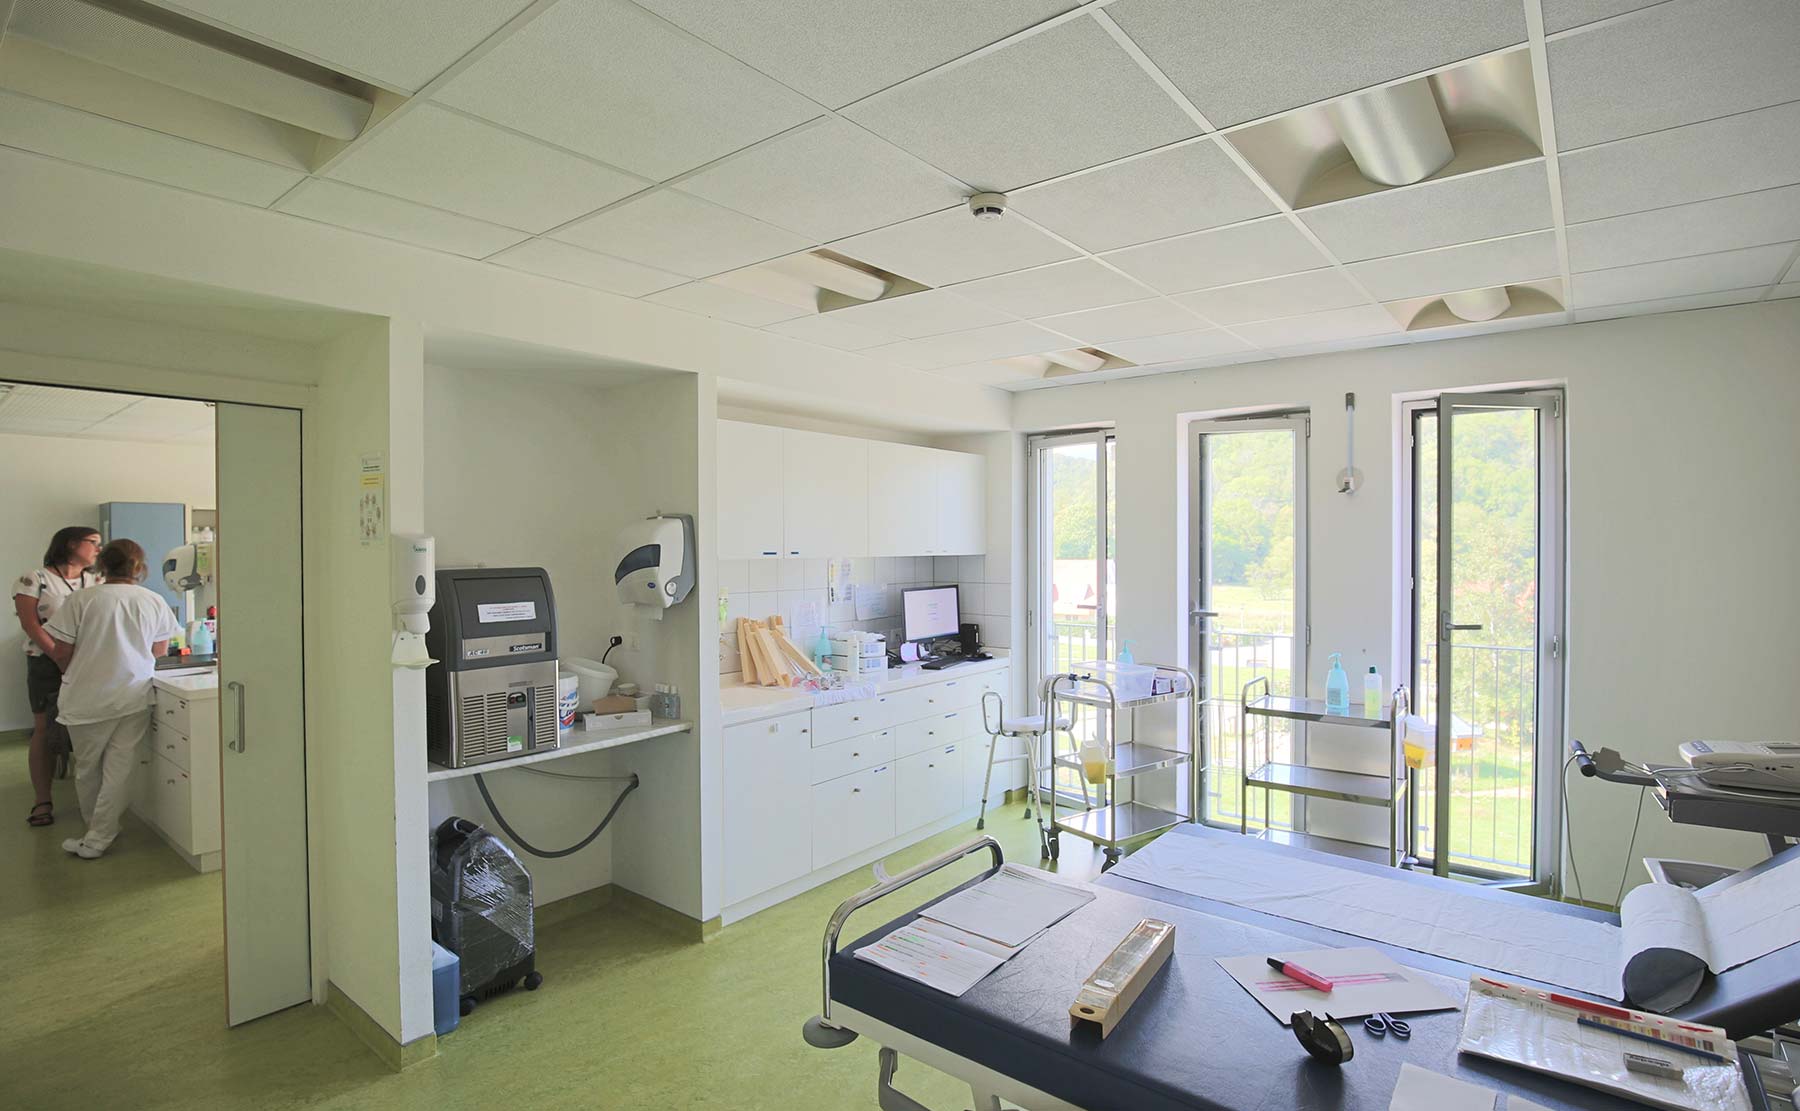  - Centre de convalescence Saint Jean / Sentheim